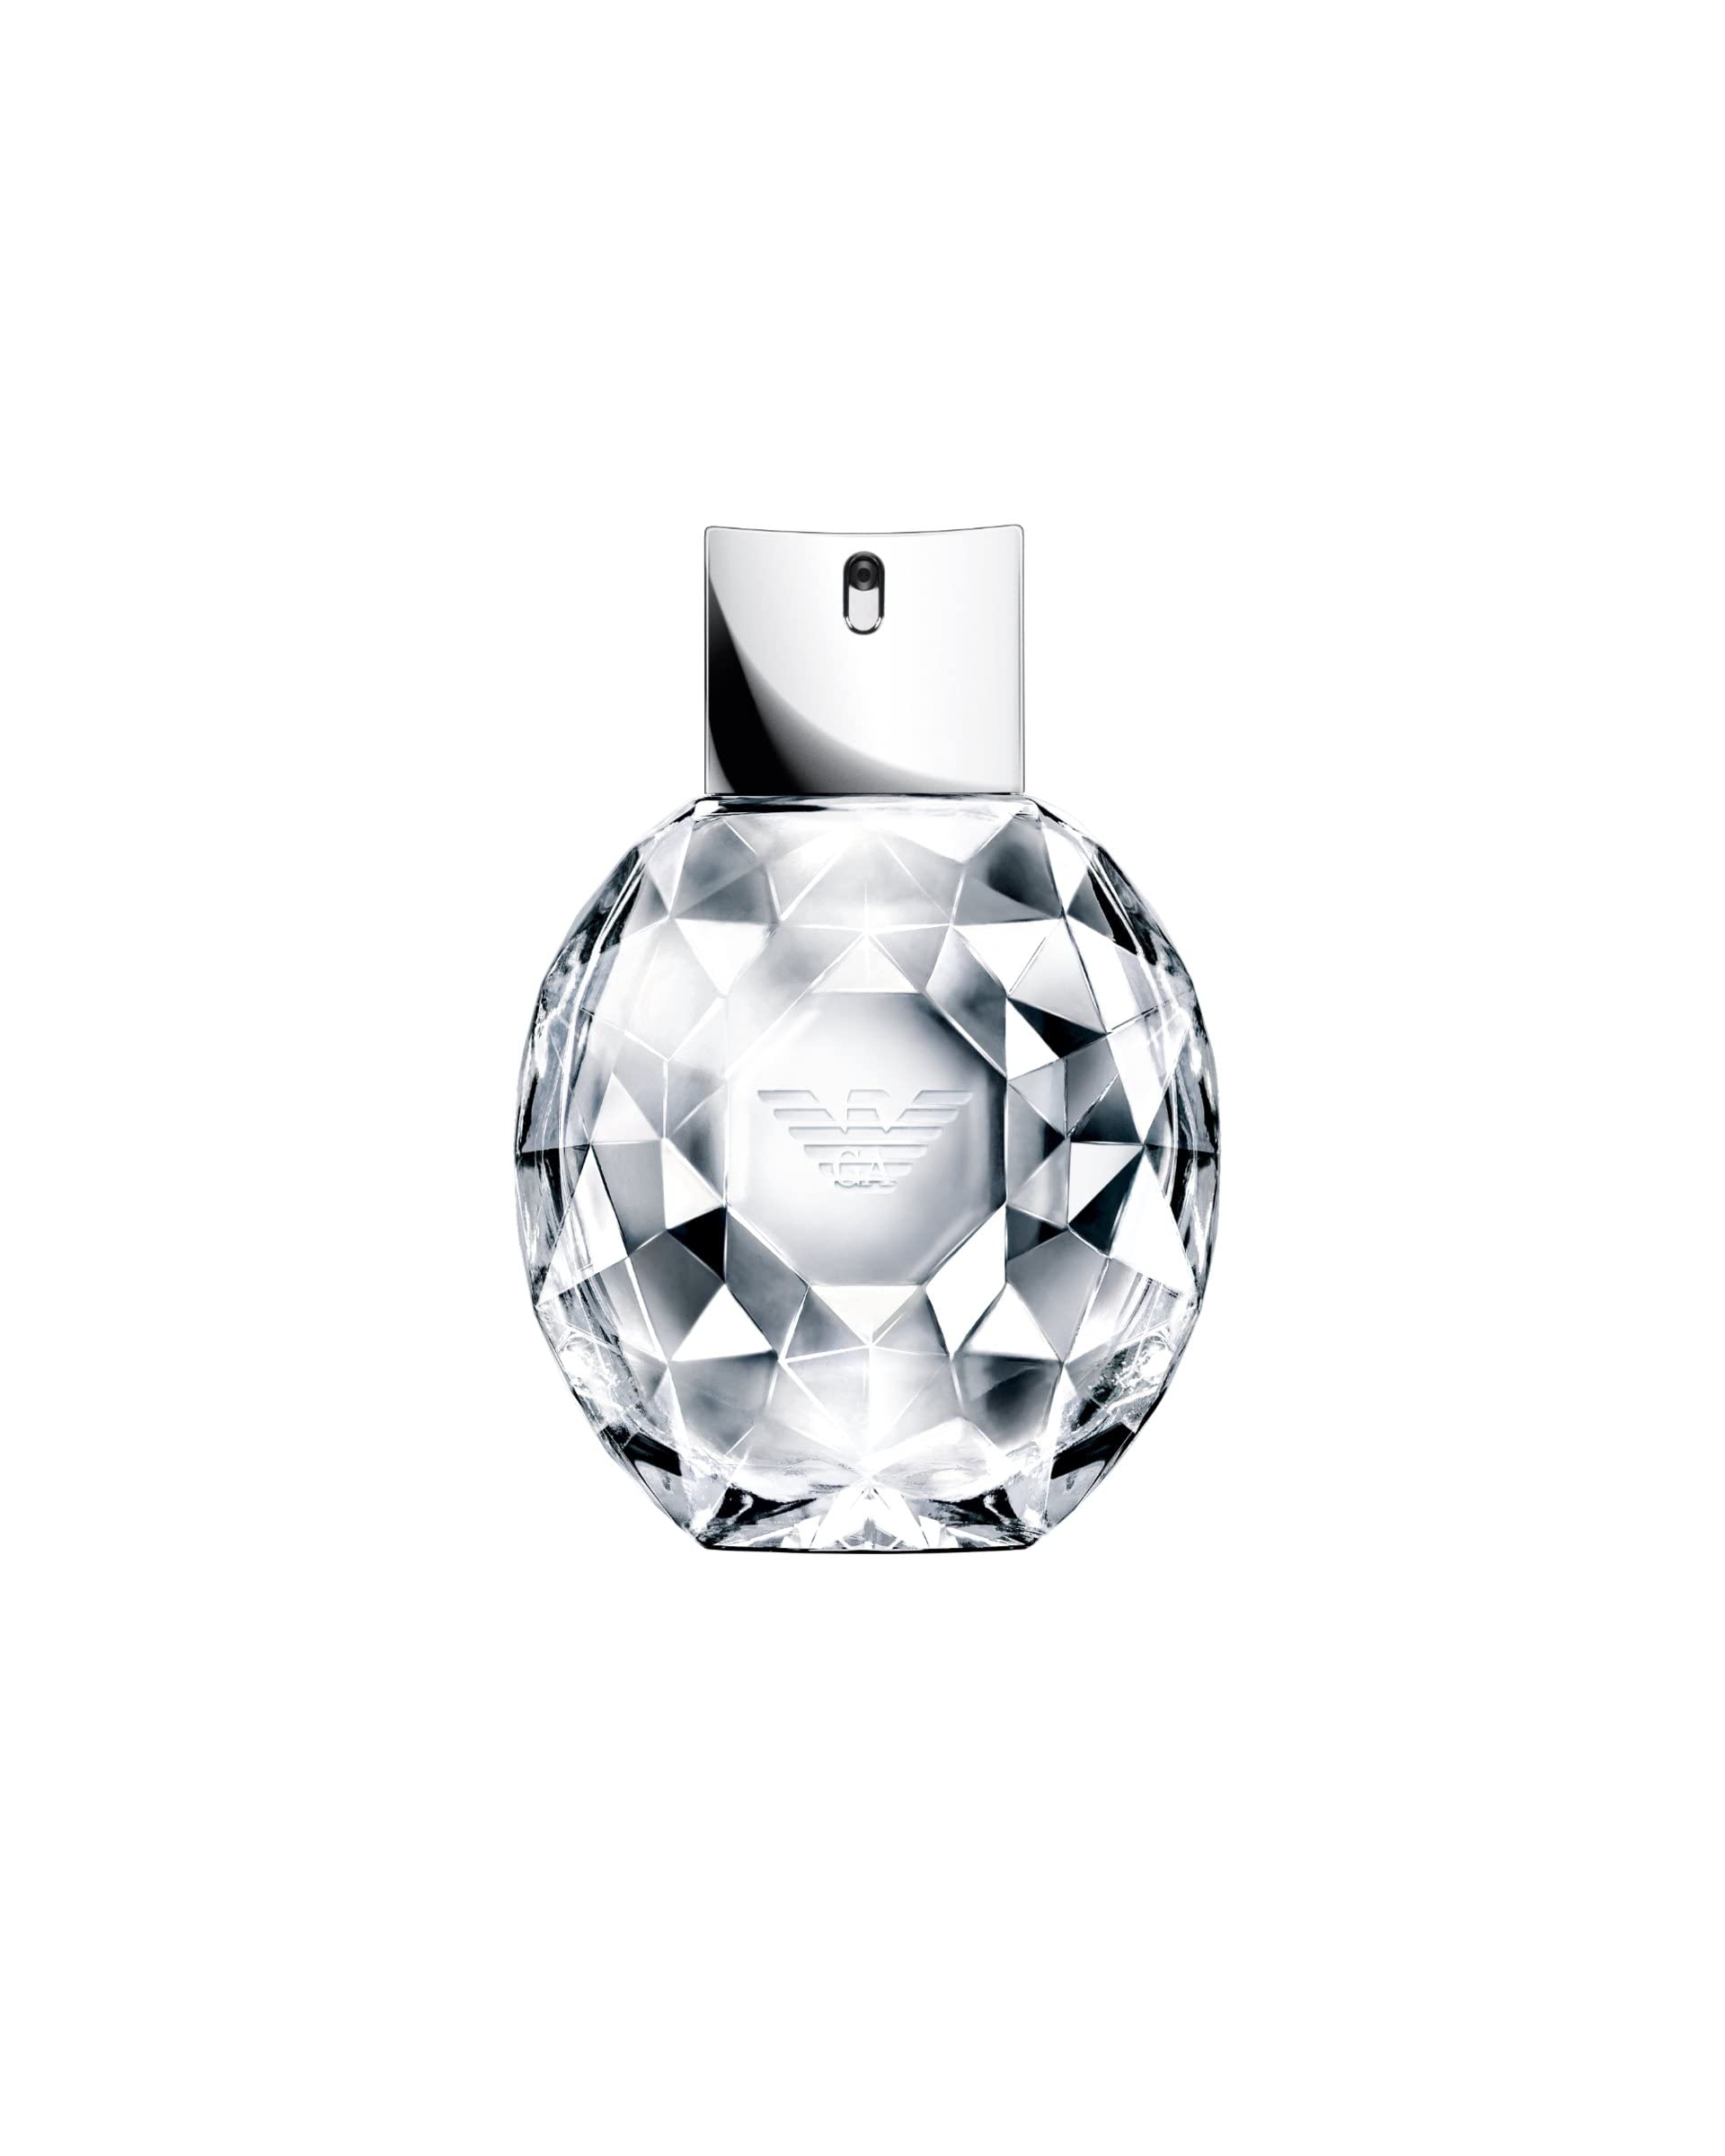 GIORGIO ARMANI Emporio Armani Diamonds for Women Eau de Parfum Spray, 3.4 Ounce